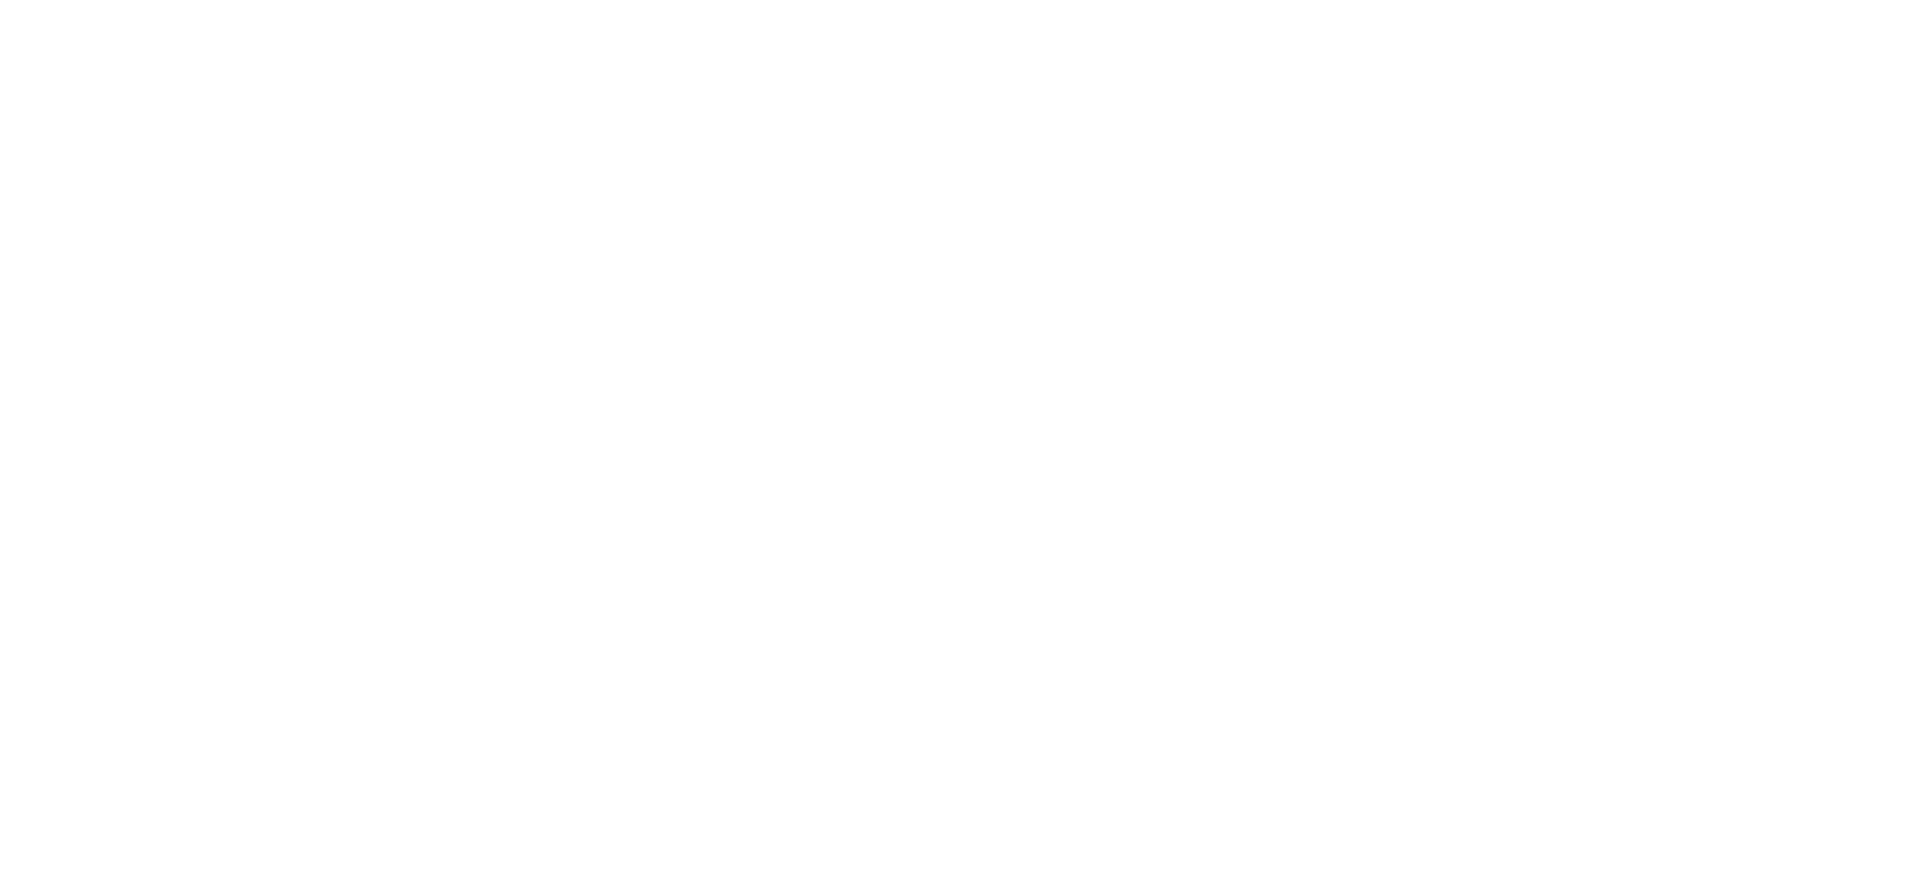 Bedrock Asset Management